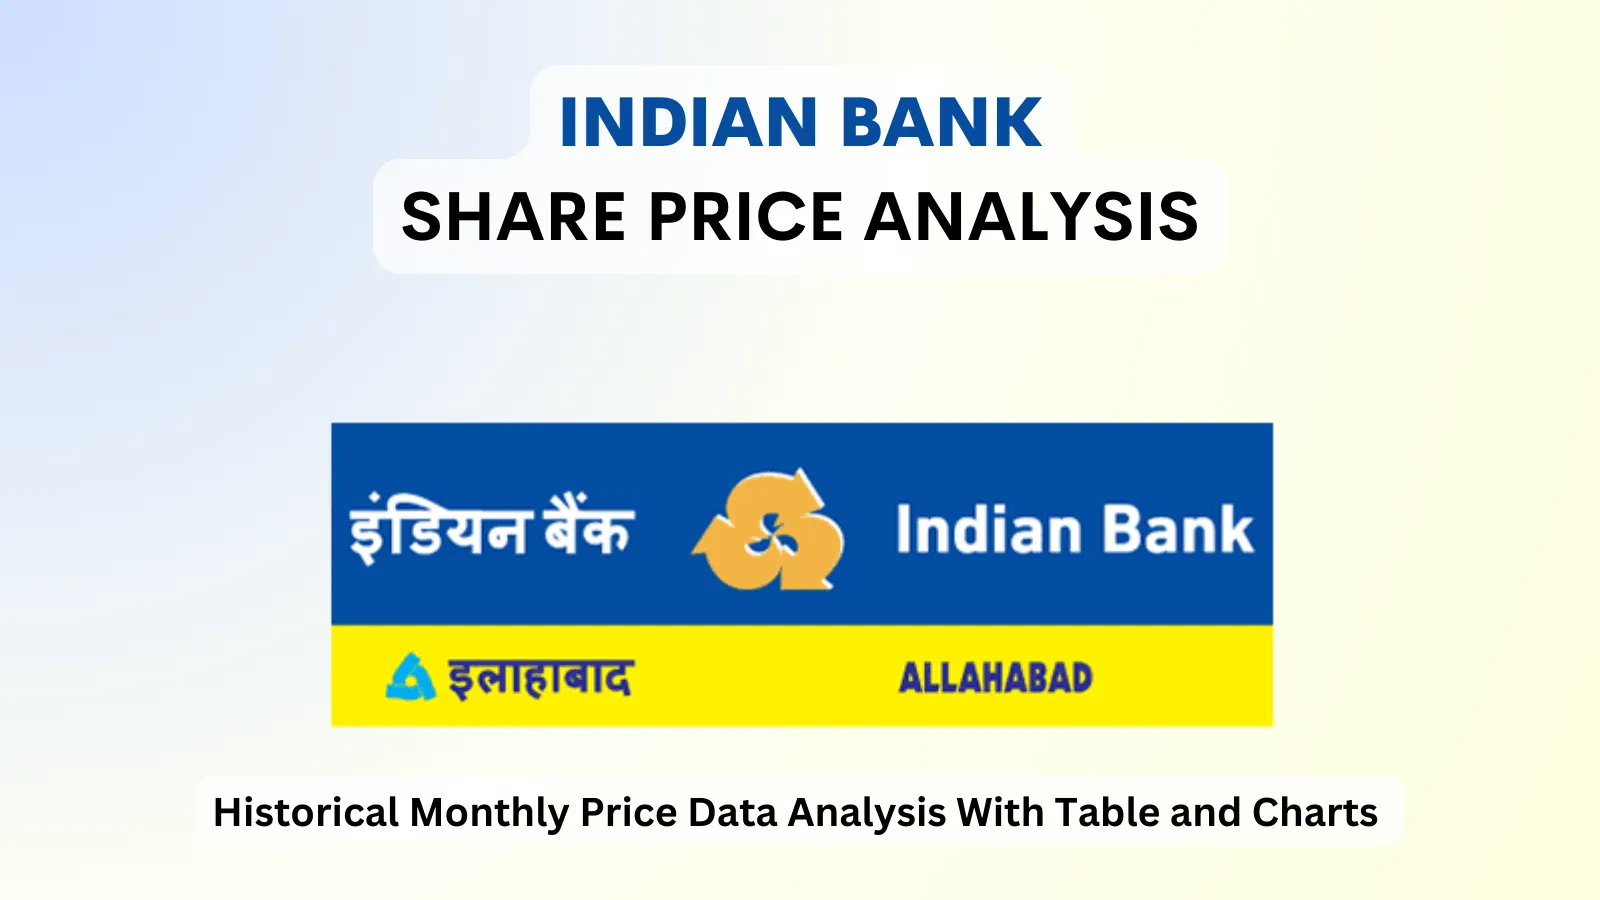 Indian Bank share price analysis